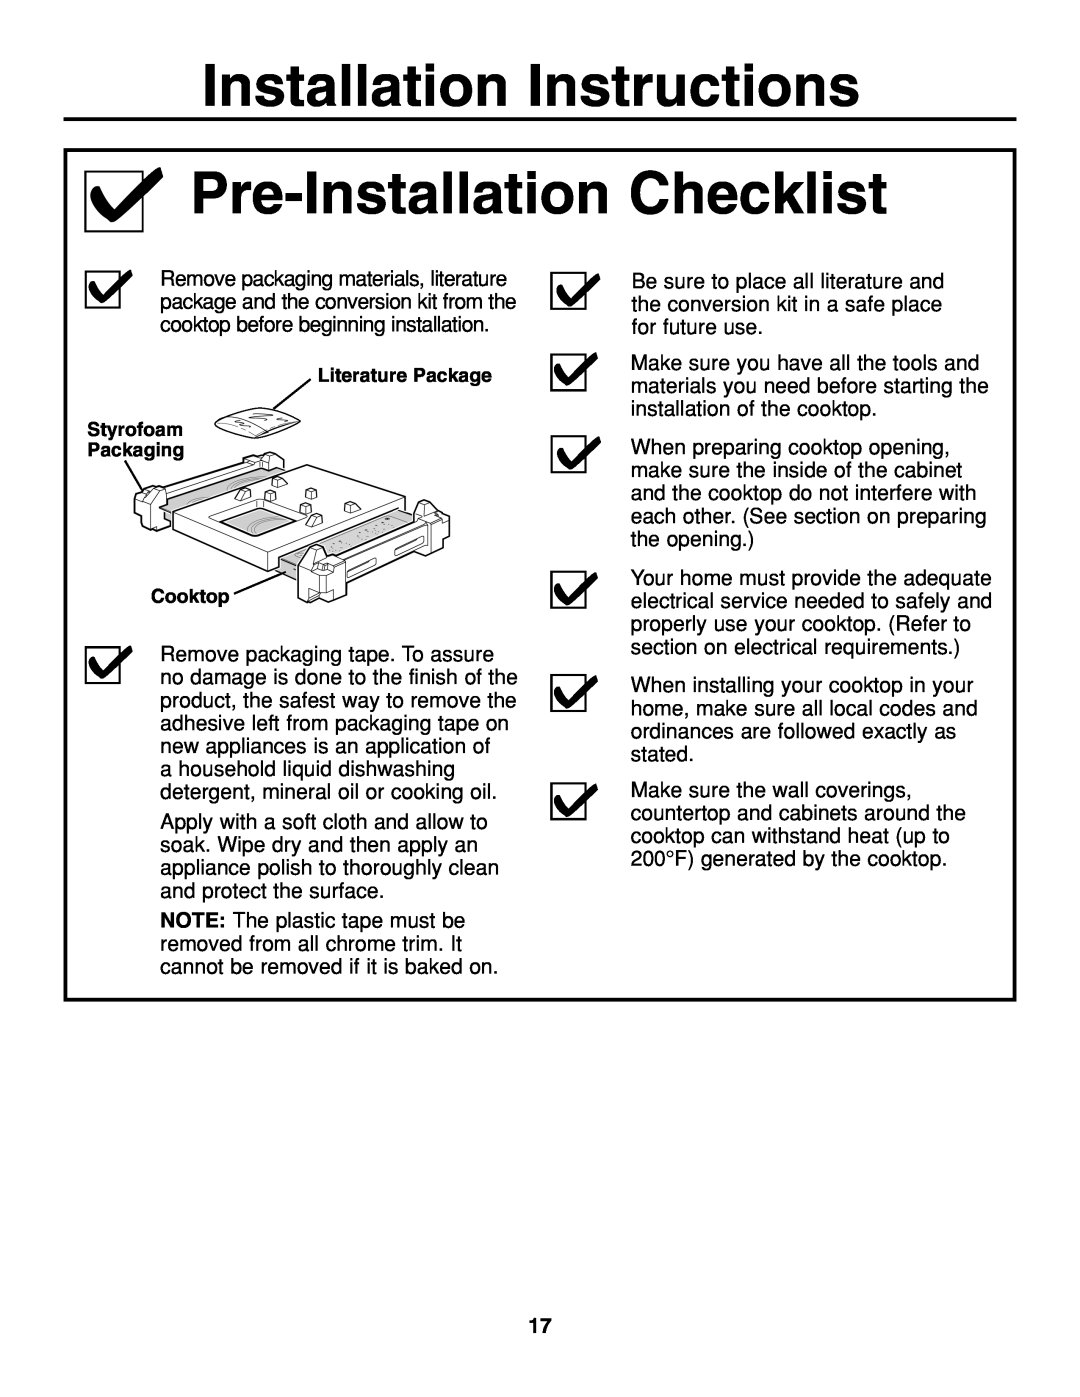 GE JGP637 installation instructions Installation Instructions Pre-Installation Checklist 